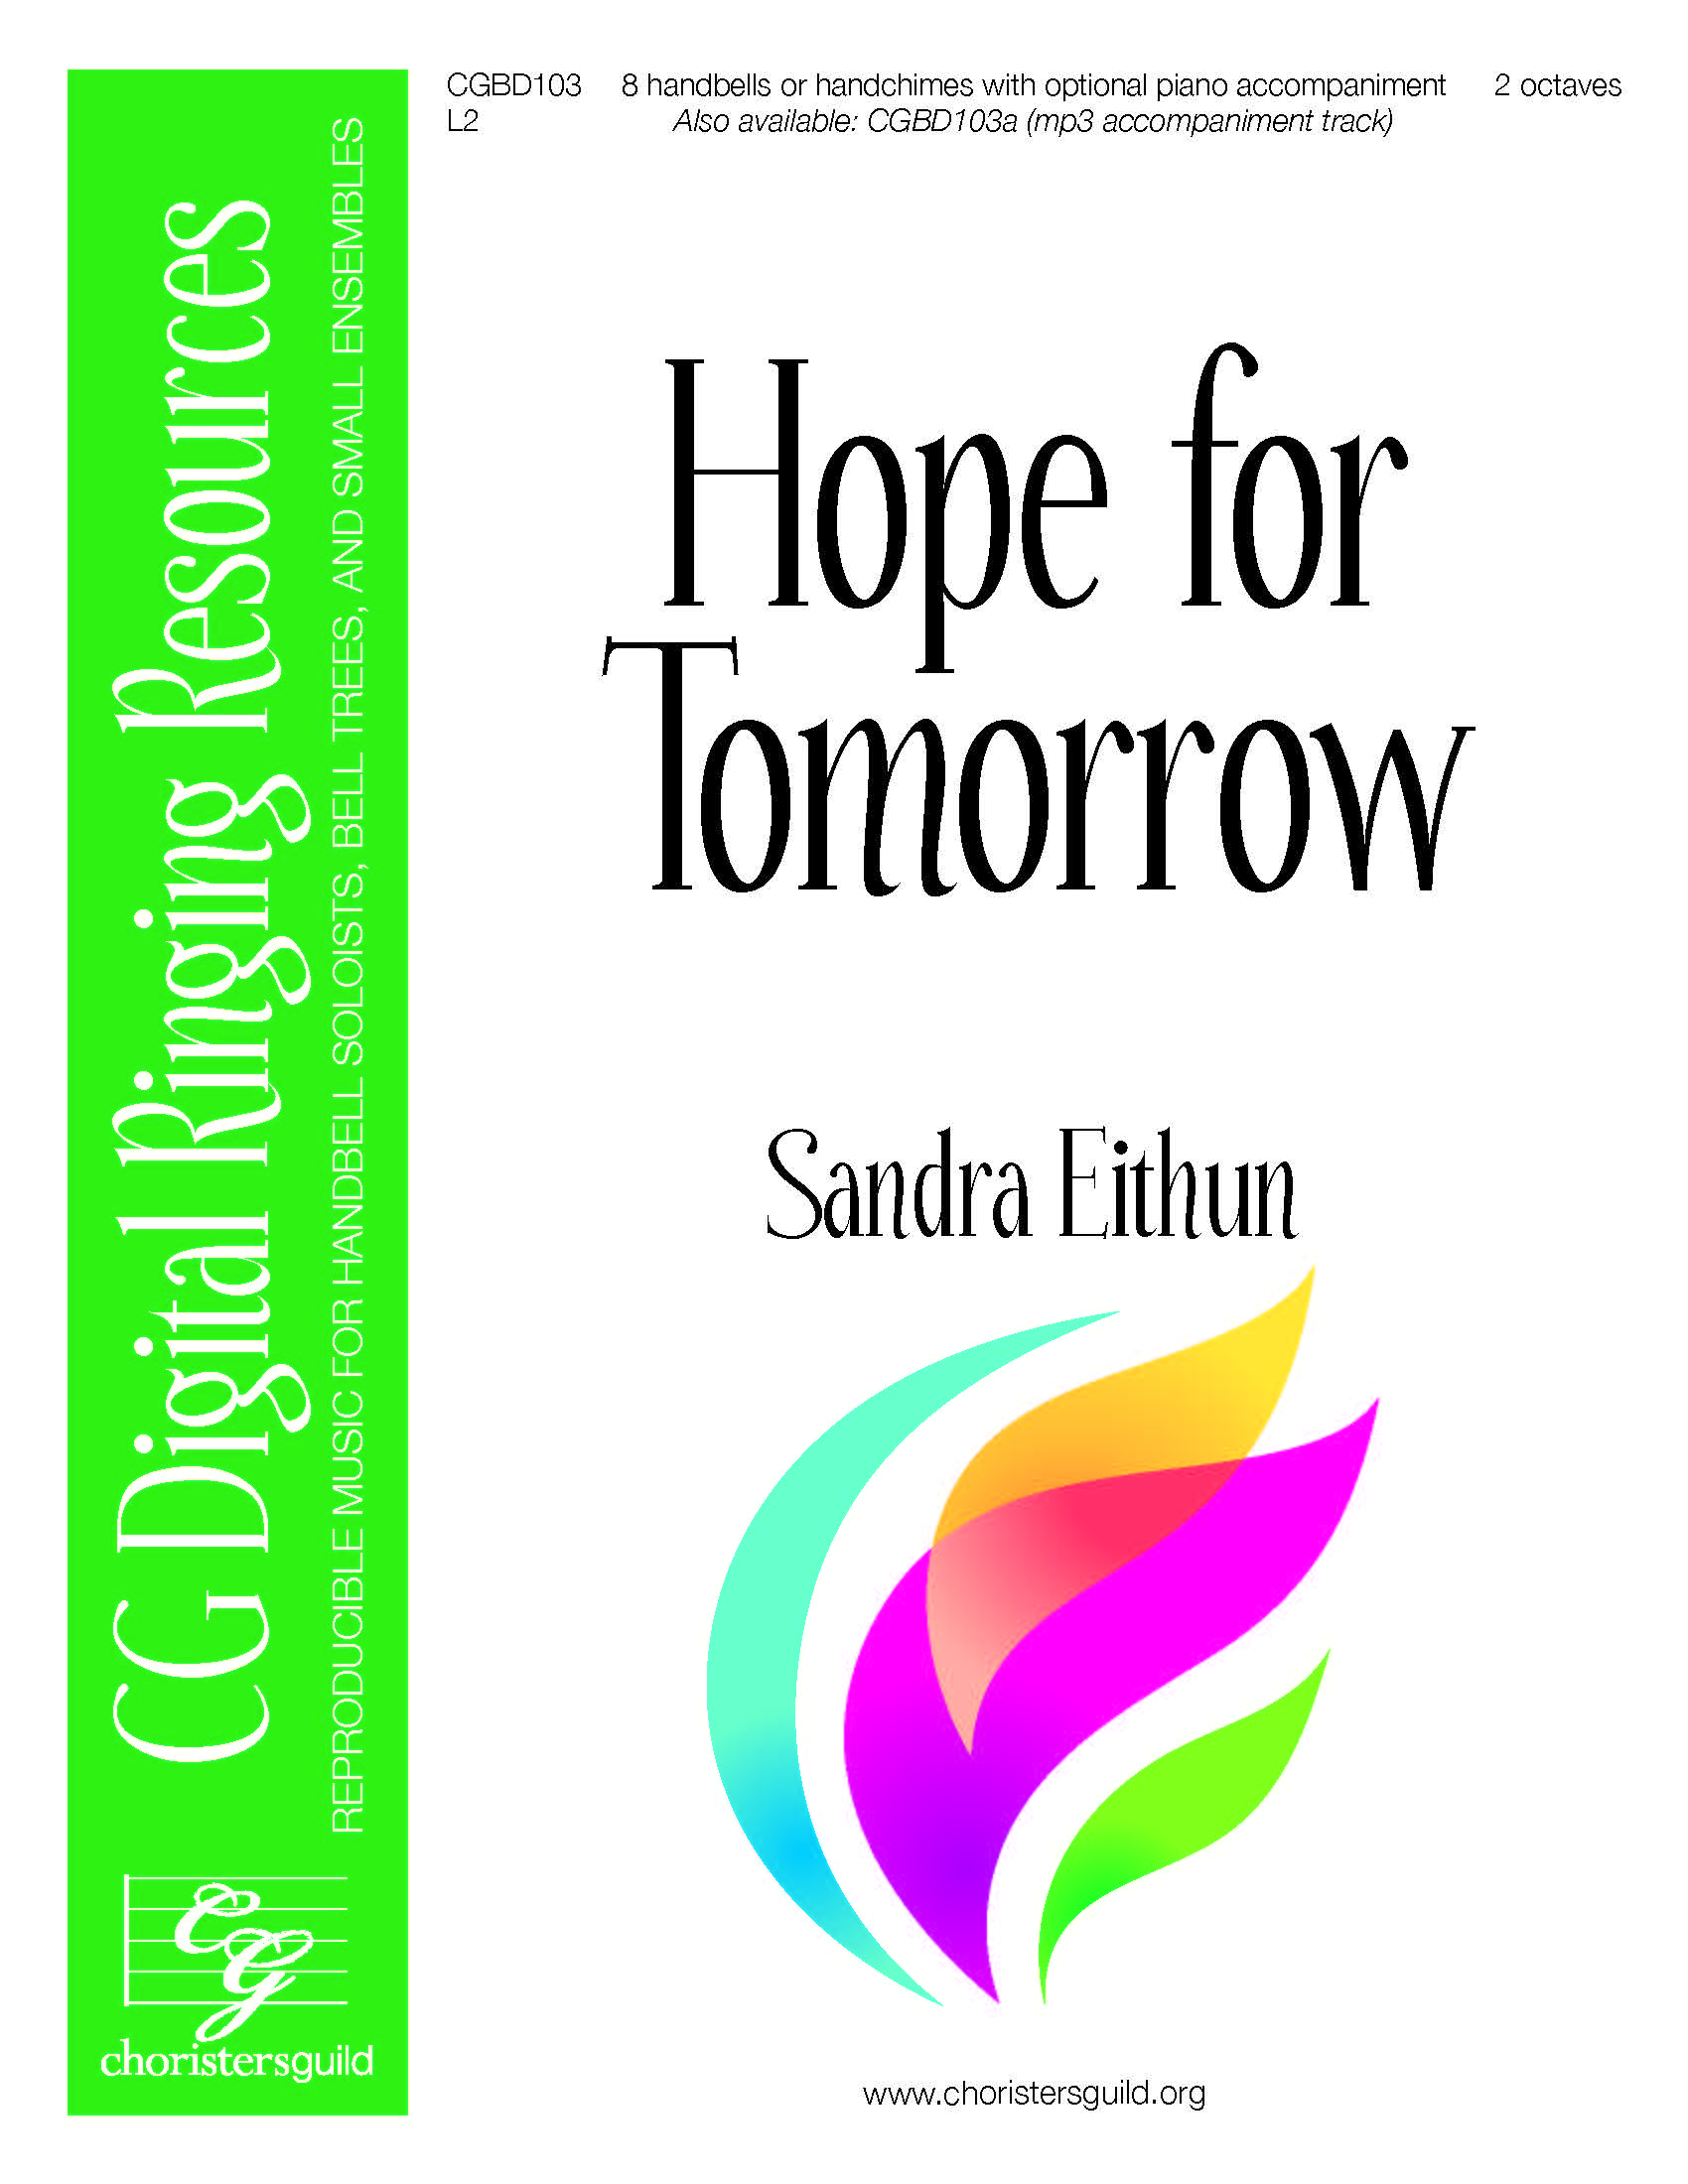 Hope for Tomorrow - Digital Accompaniment Track